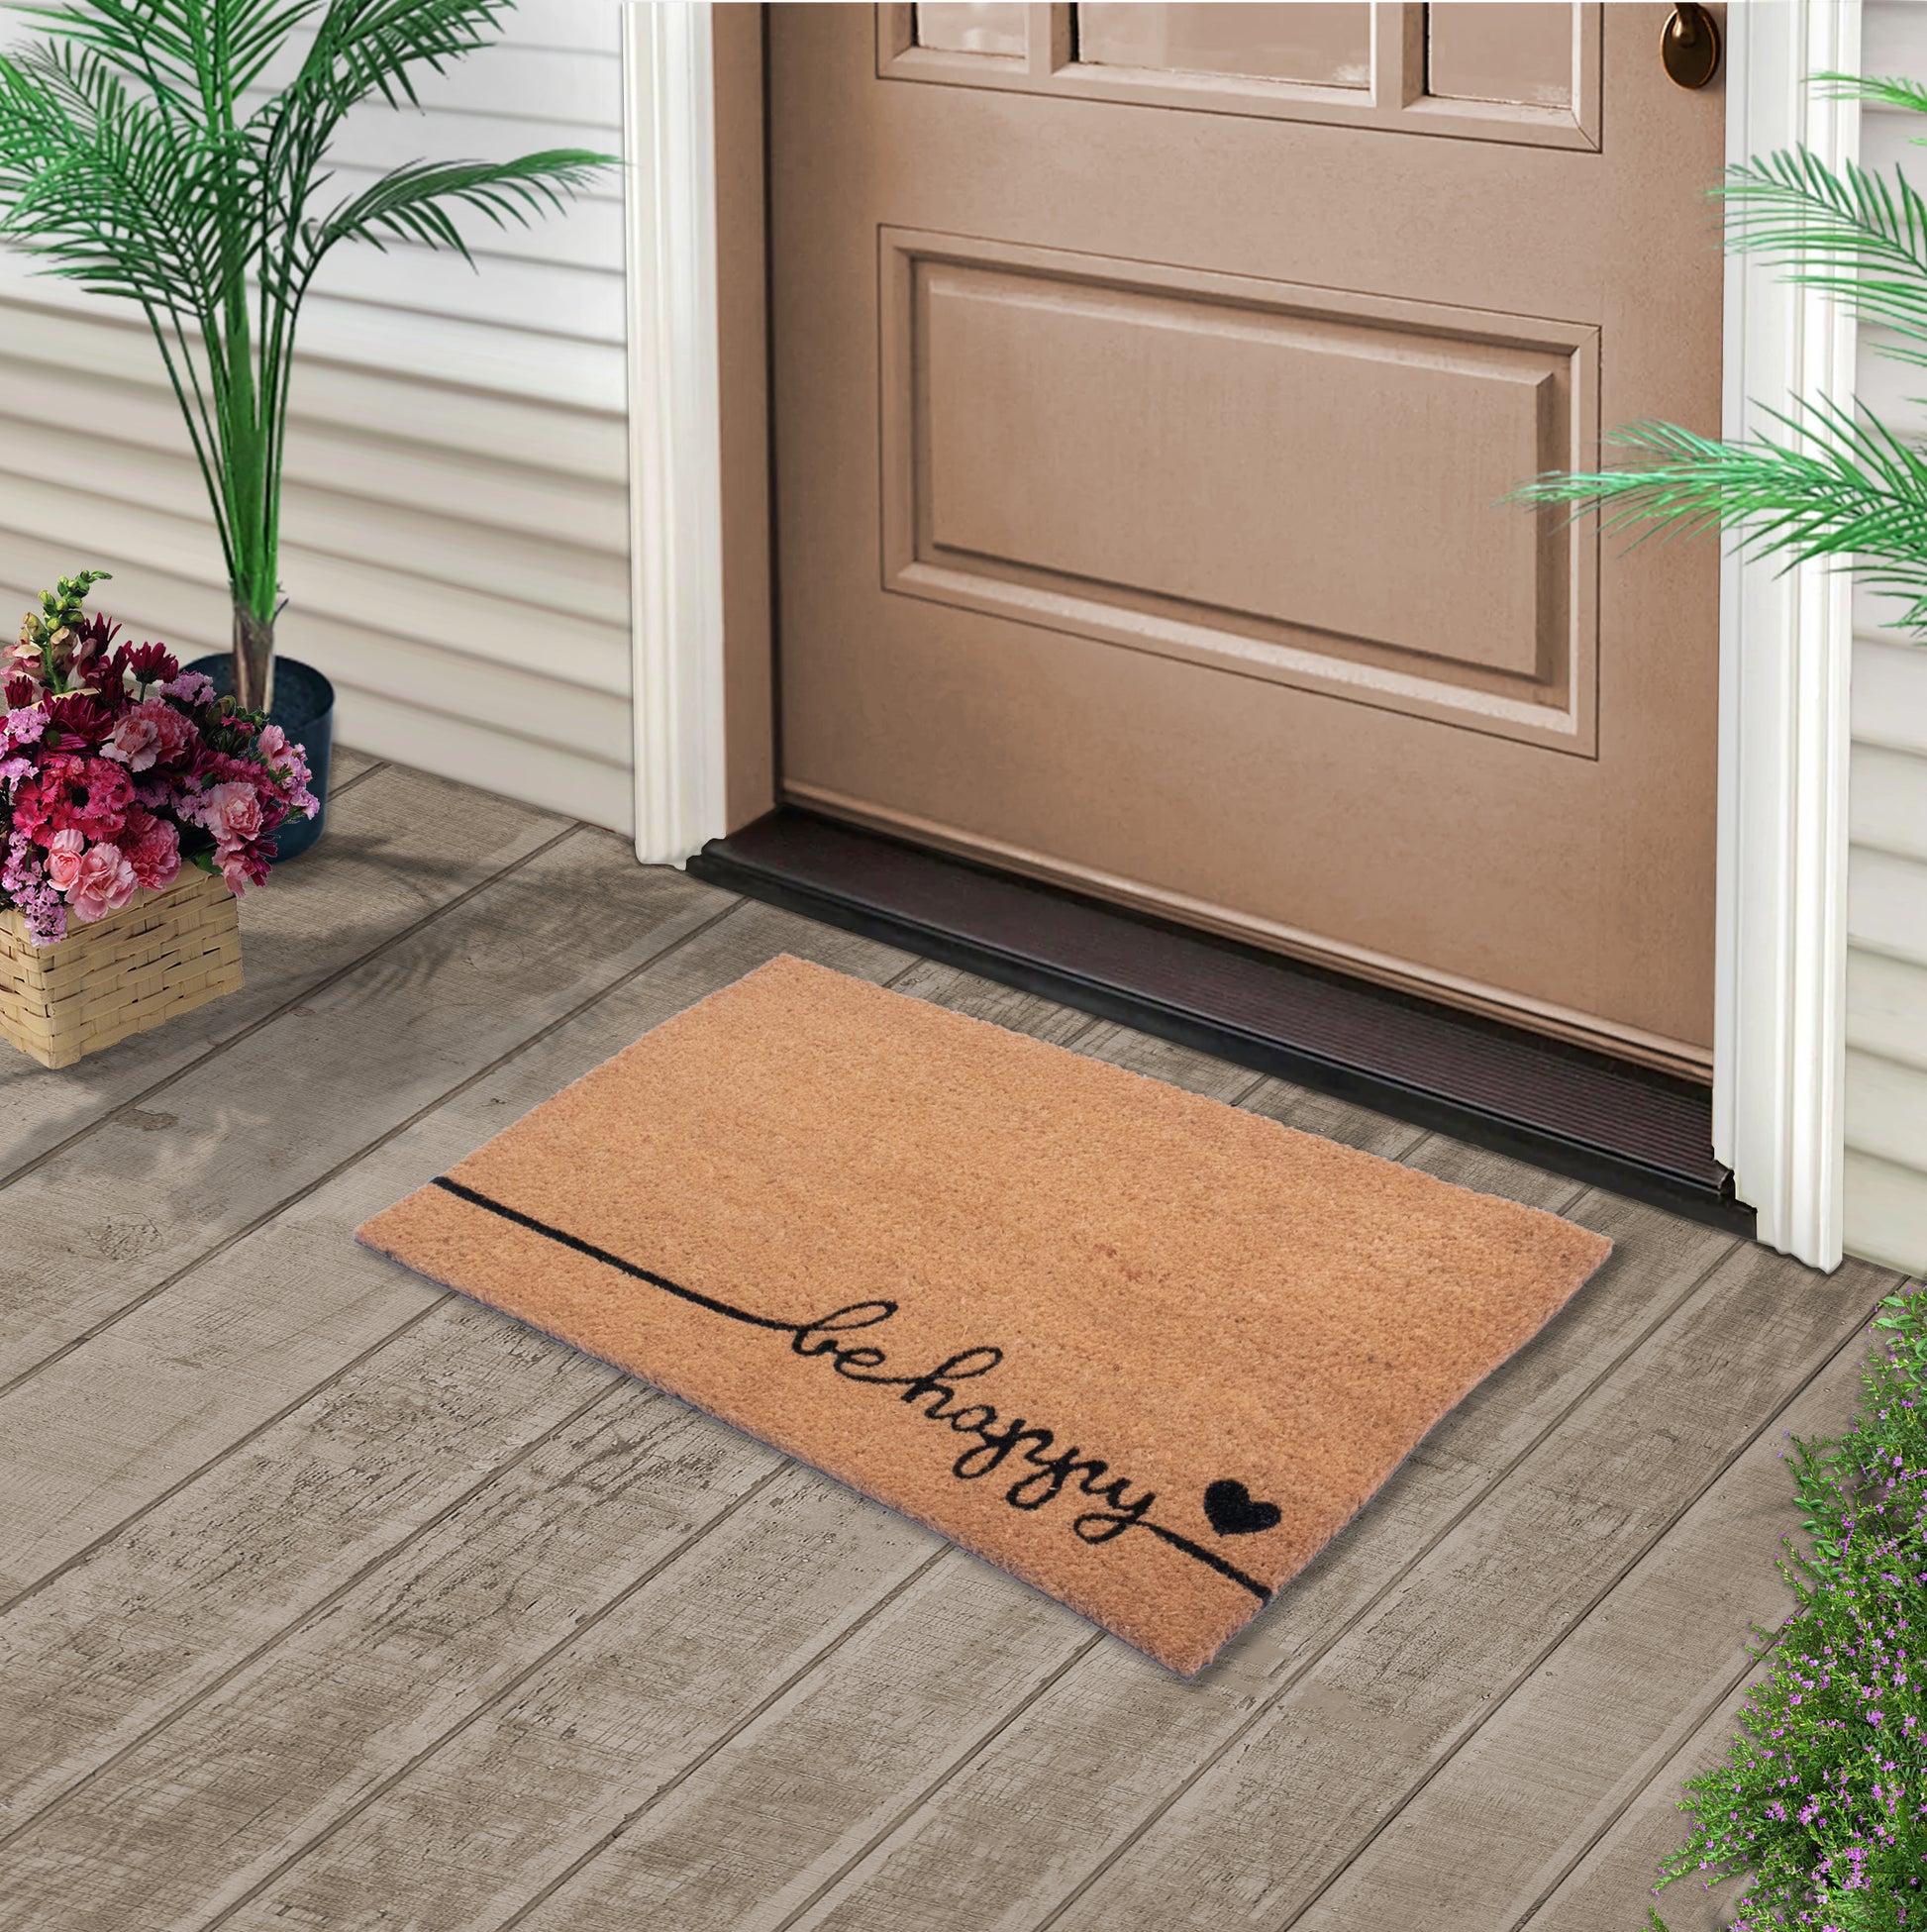 Hello Natural Coir Doormat with Non-Slip Backing - Beige/Khaki